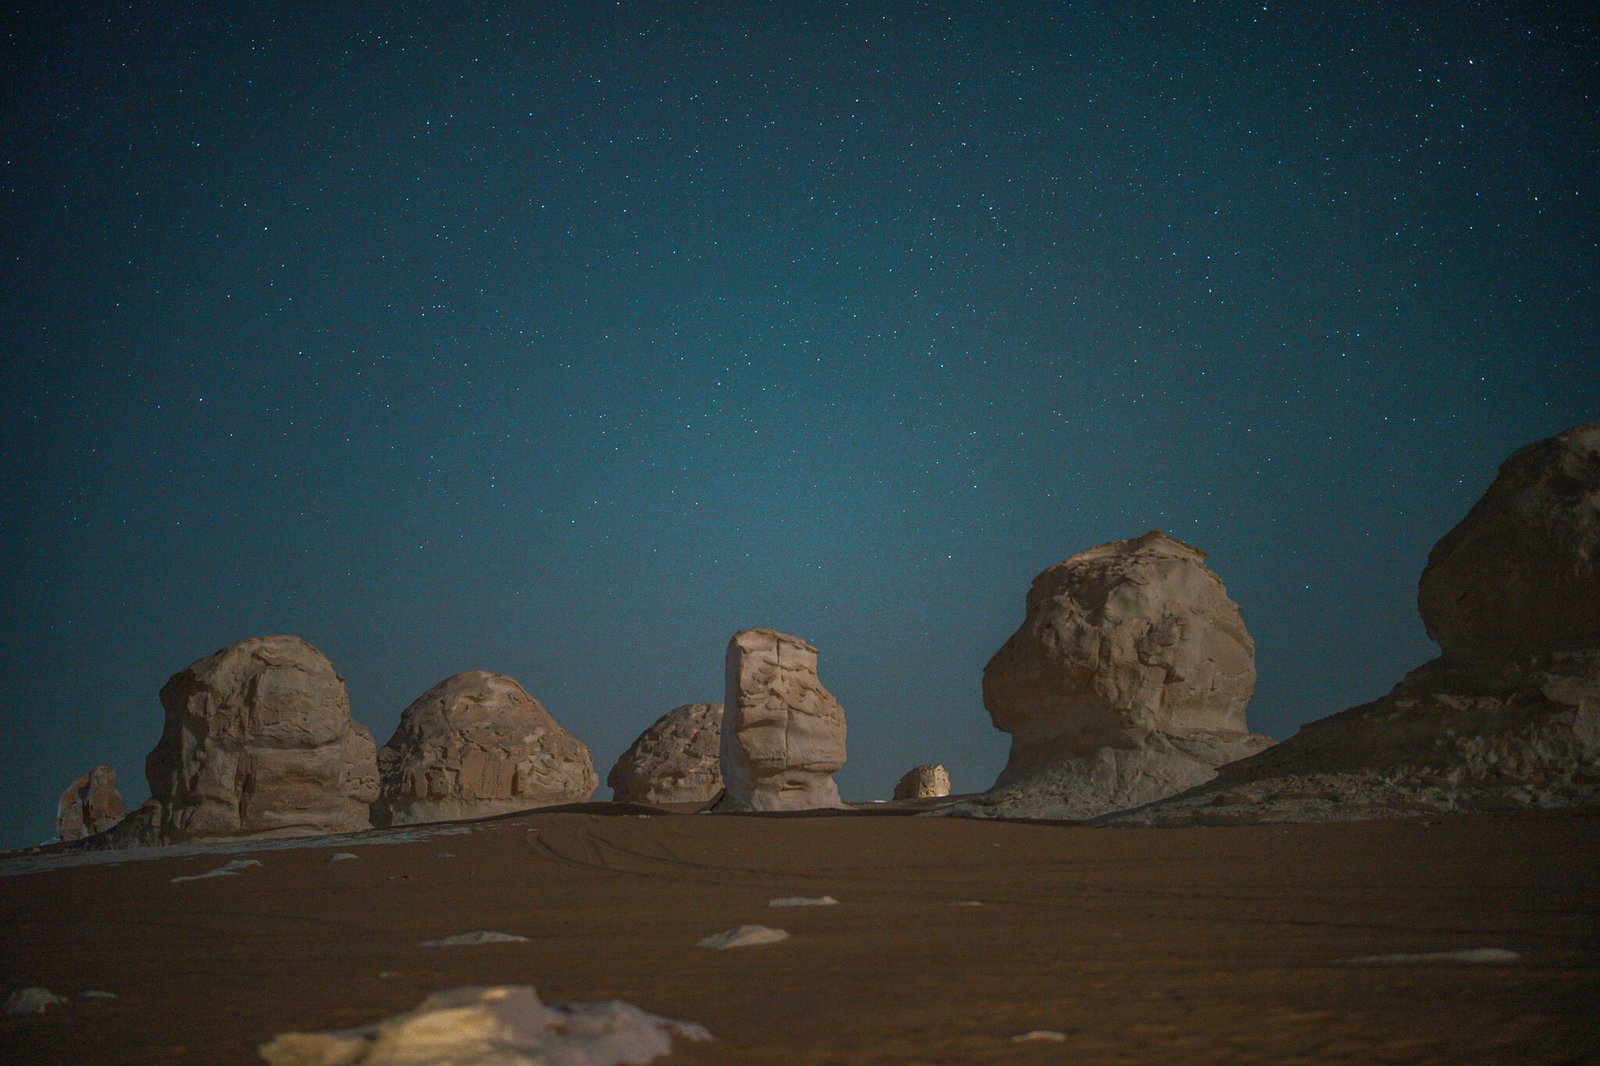 astrophotography in the white desert, Egypt